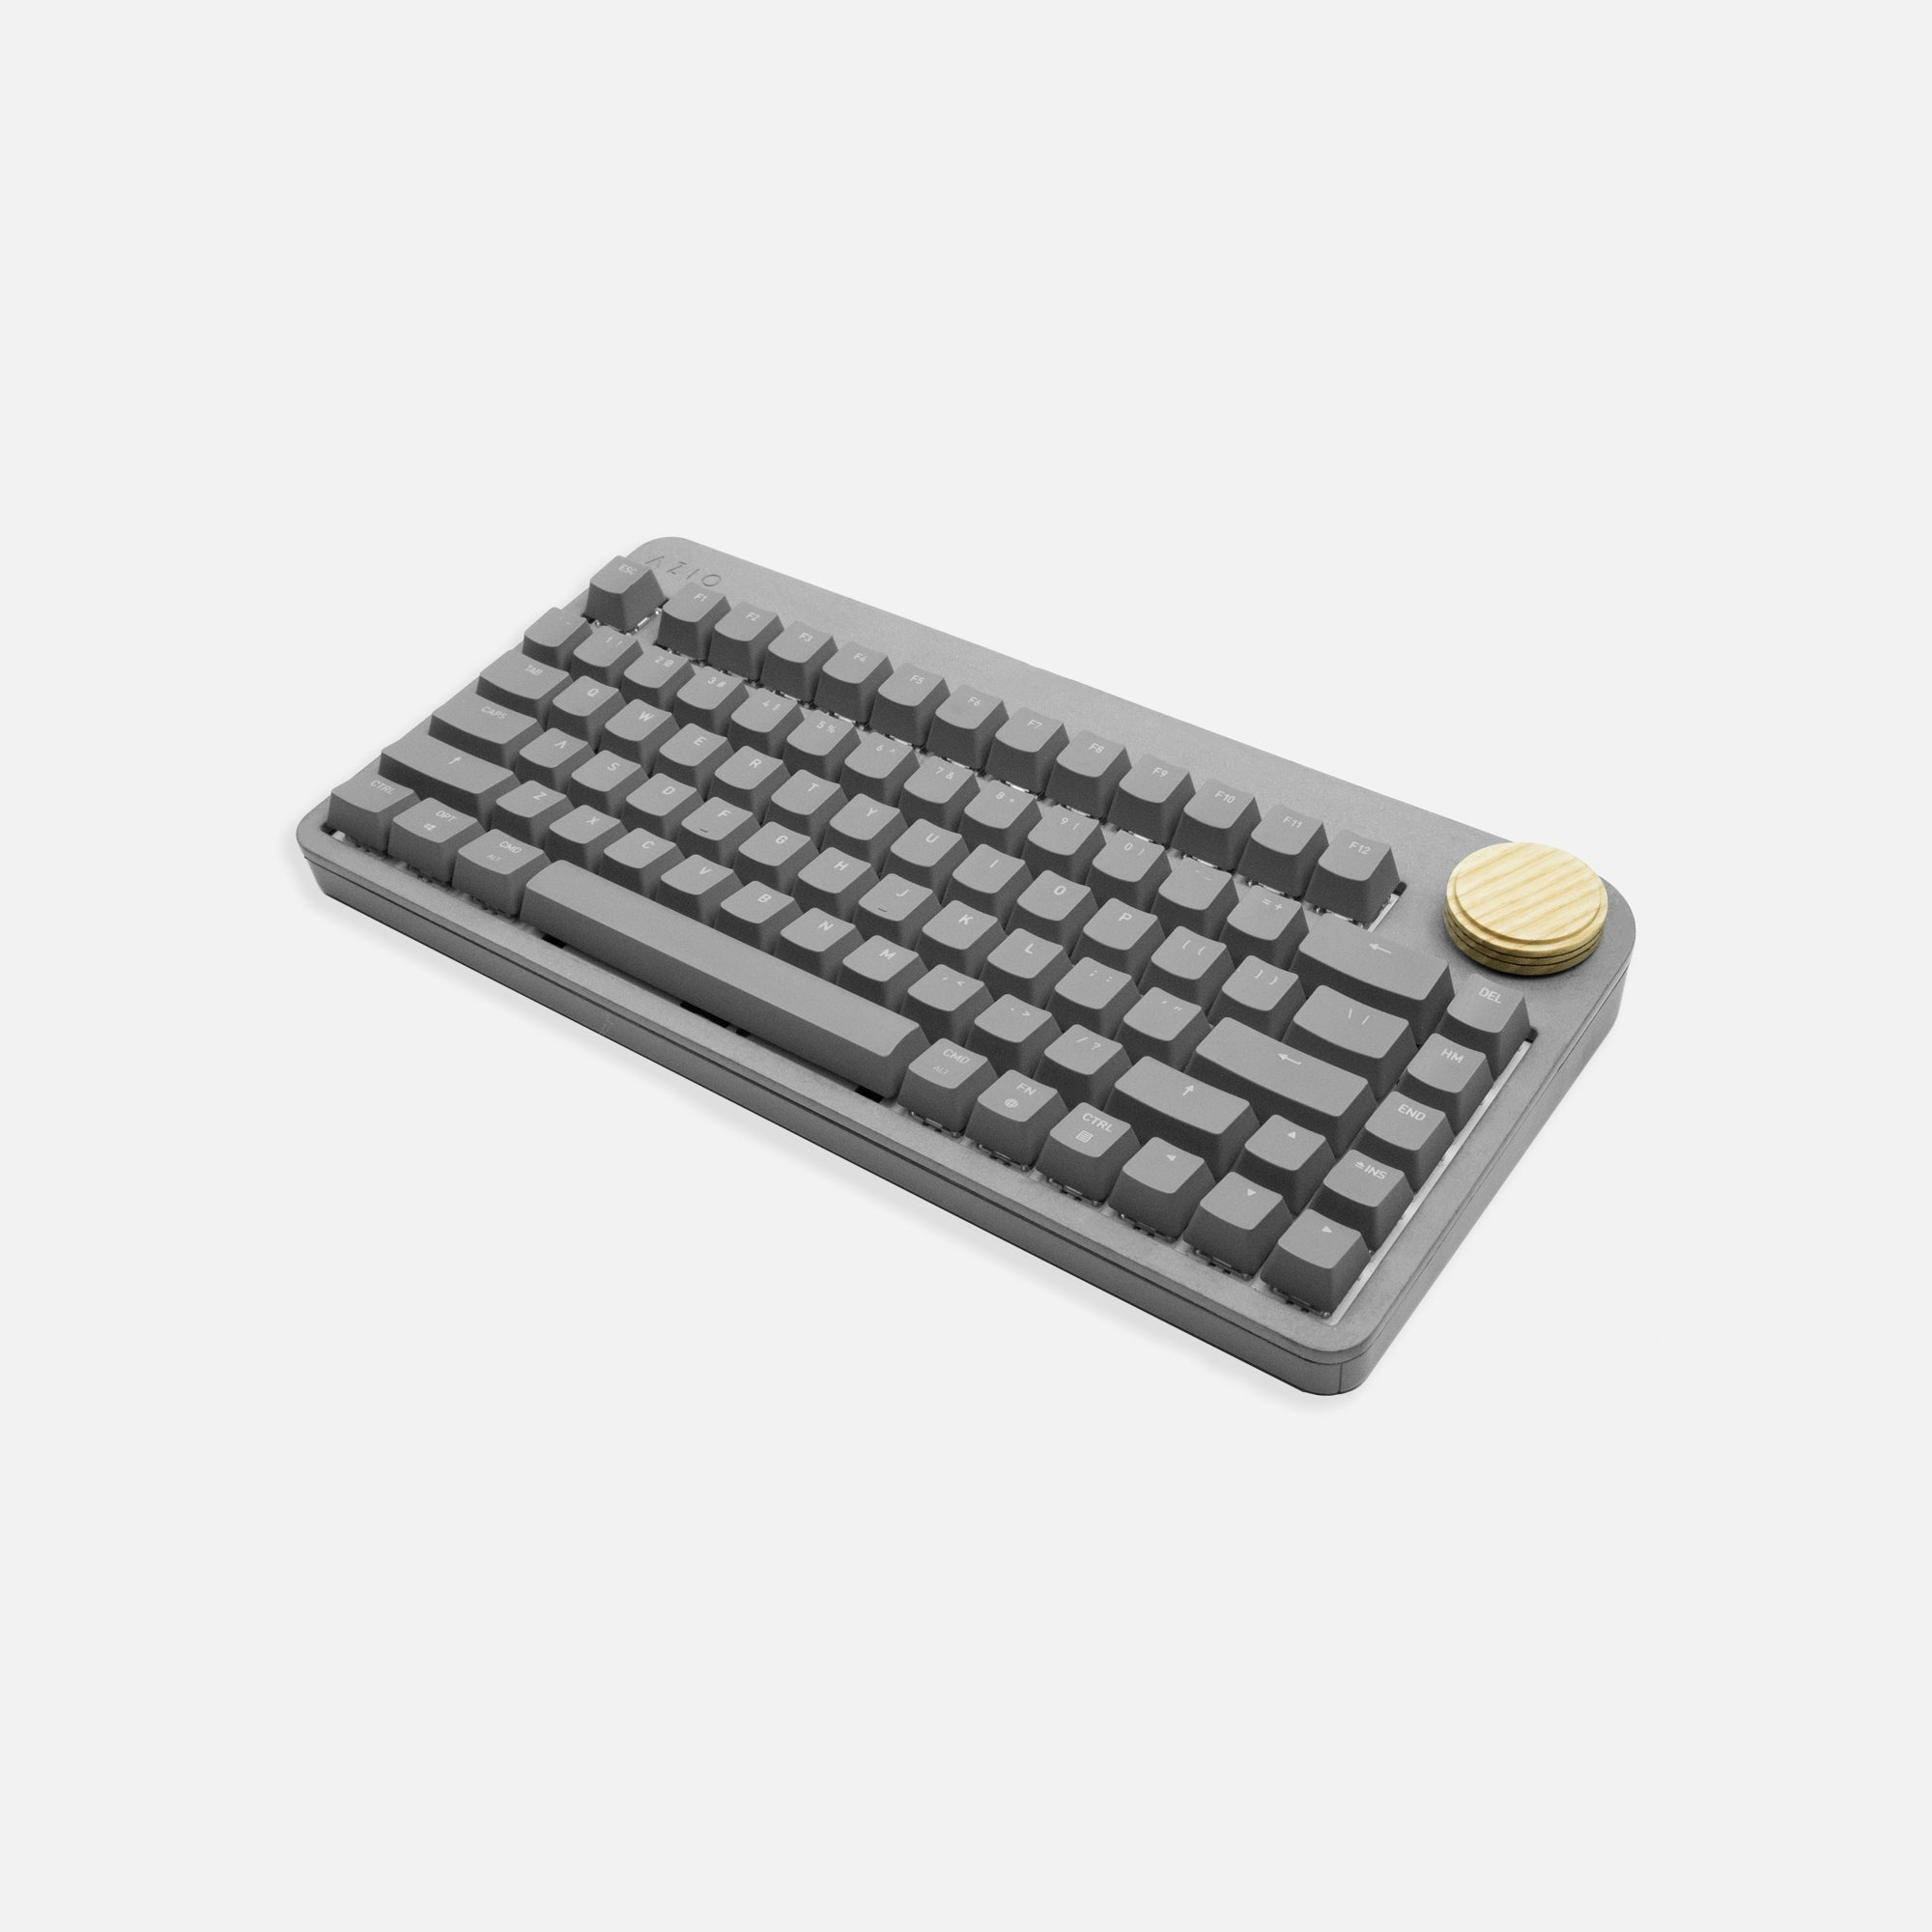 Tera75 trådløst tastatur